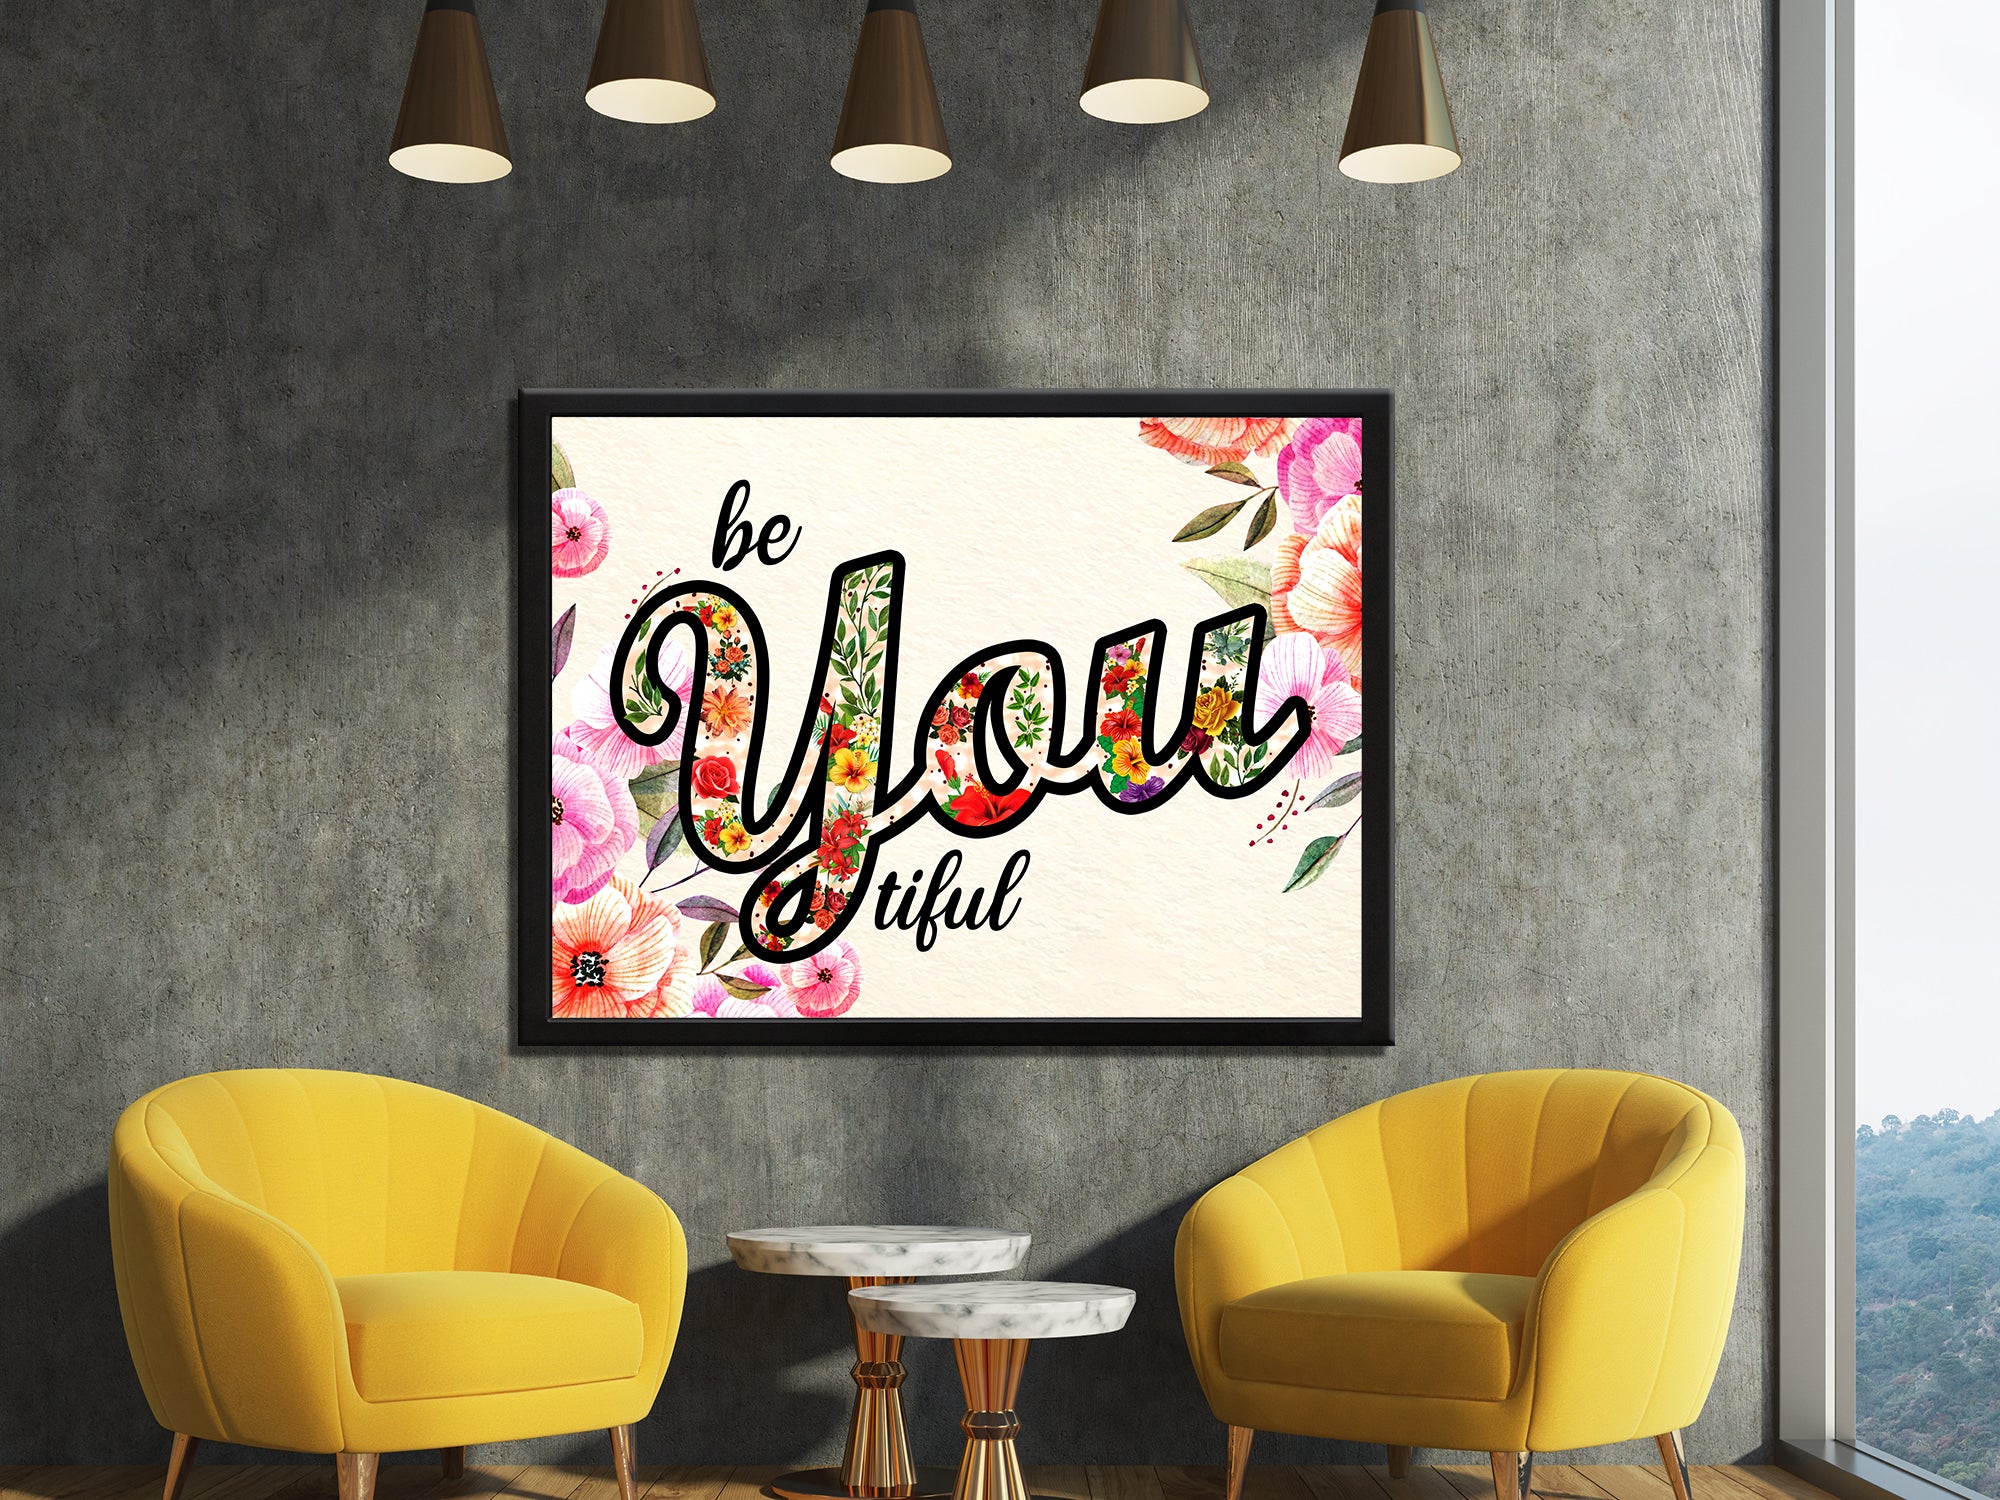 BE-YOU-TIFUL - Inspiring - Canvas Wall Art